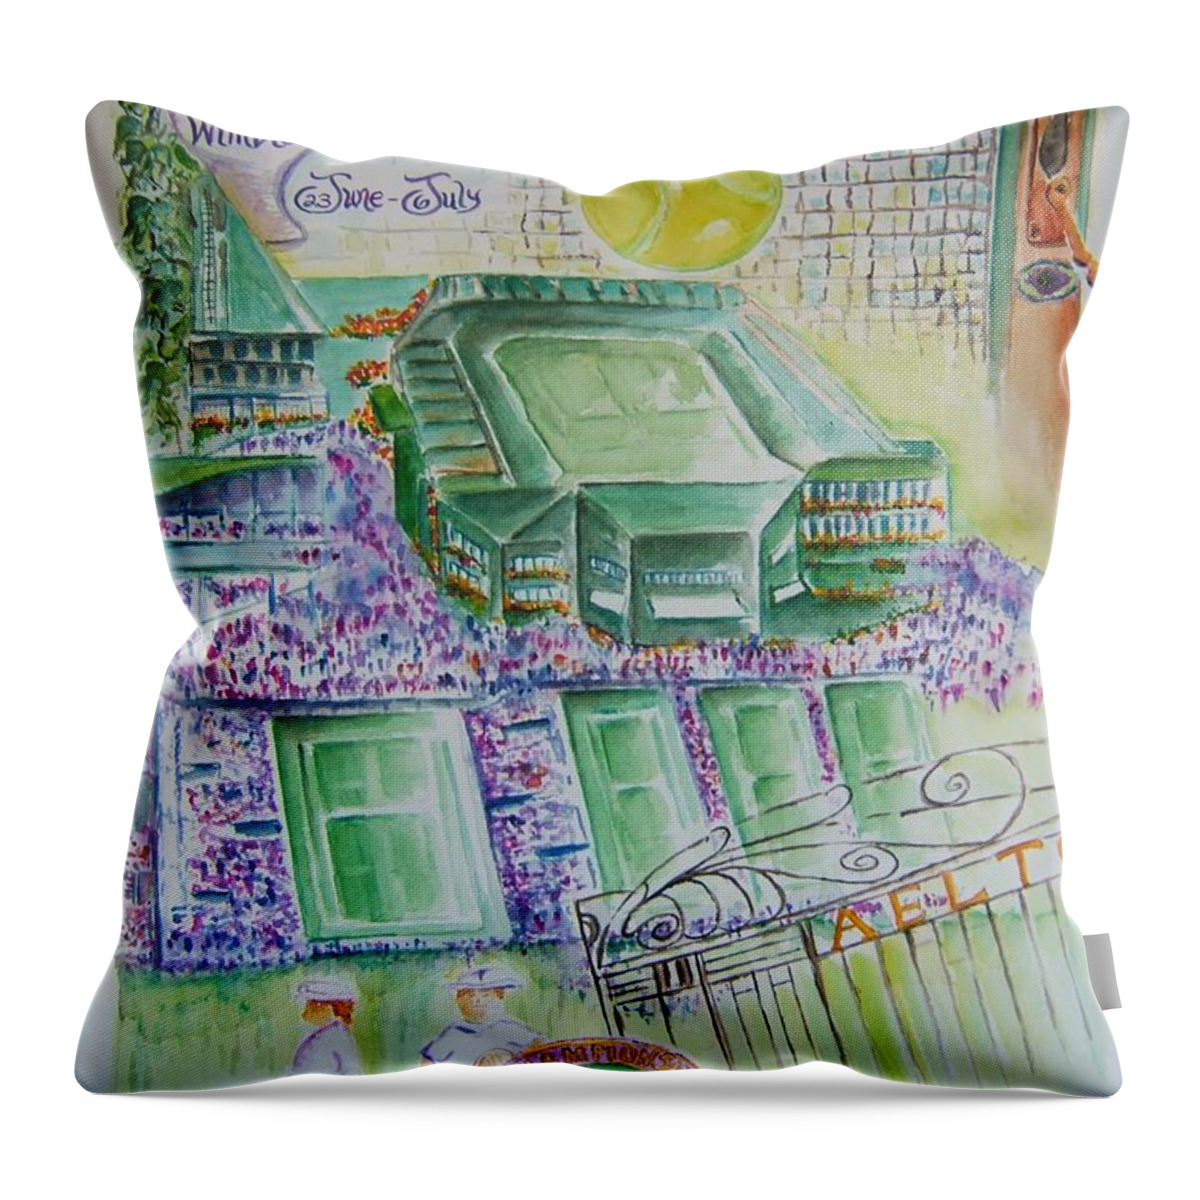 Wimbledon Throw Pillow featuring the painting Wimbledon 2014 by Elaine Duras